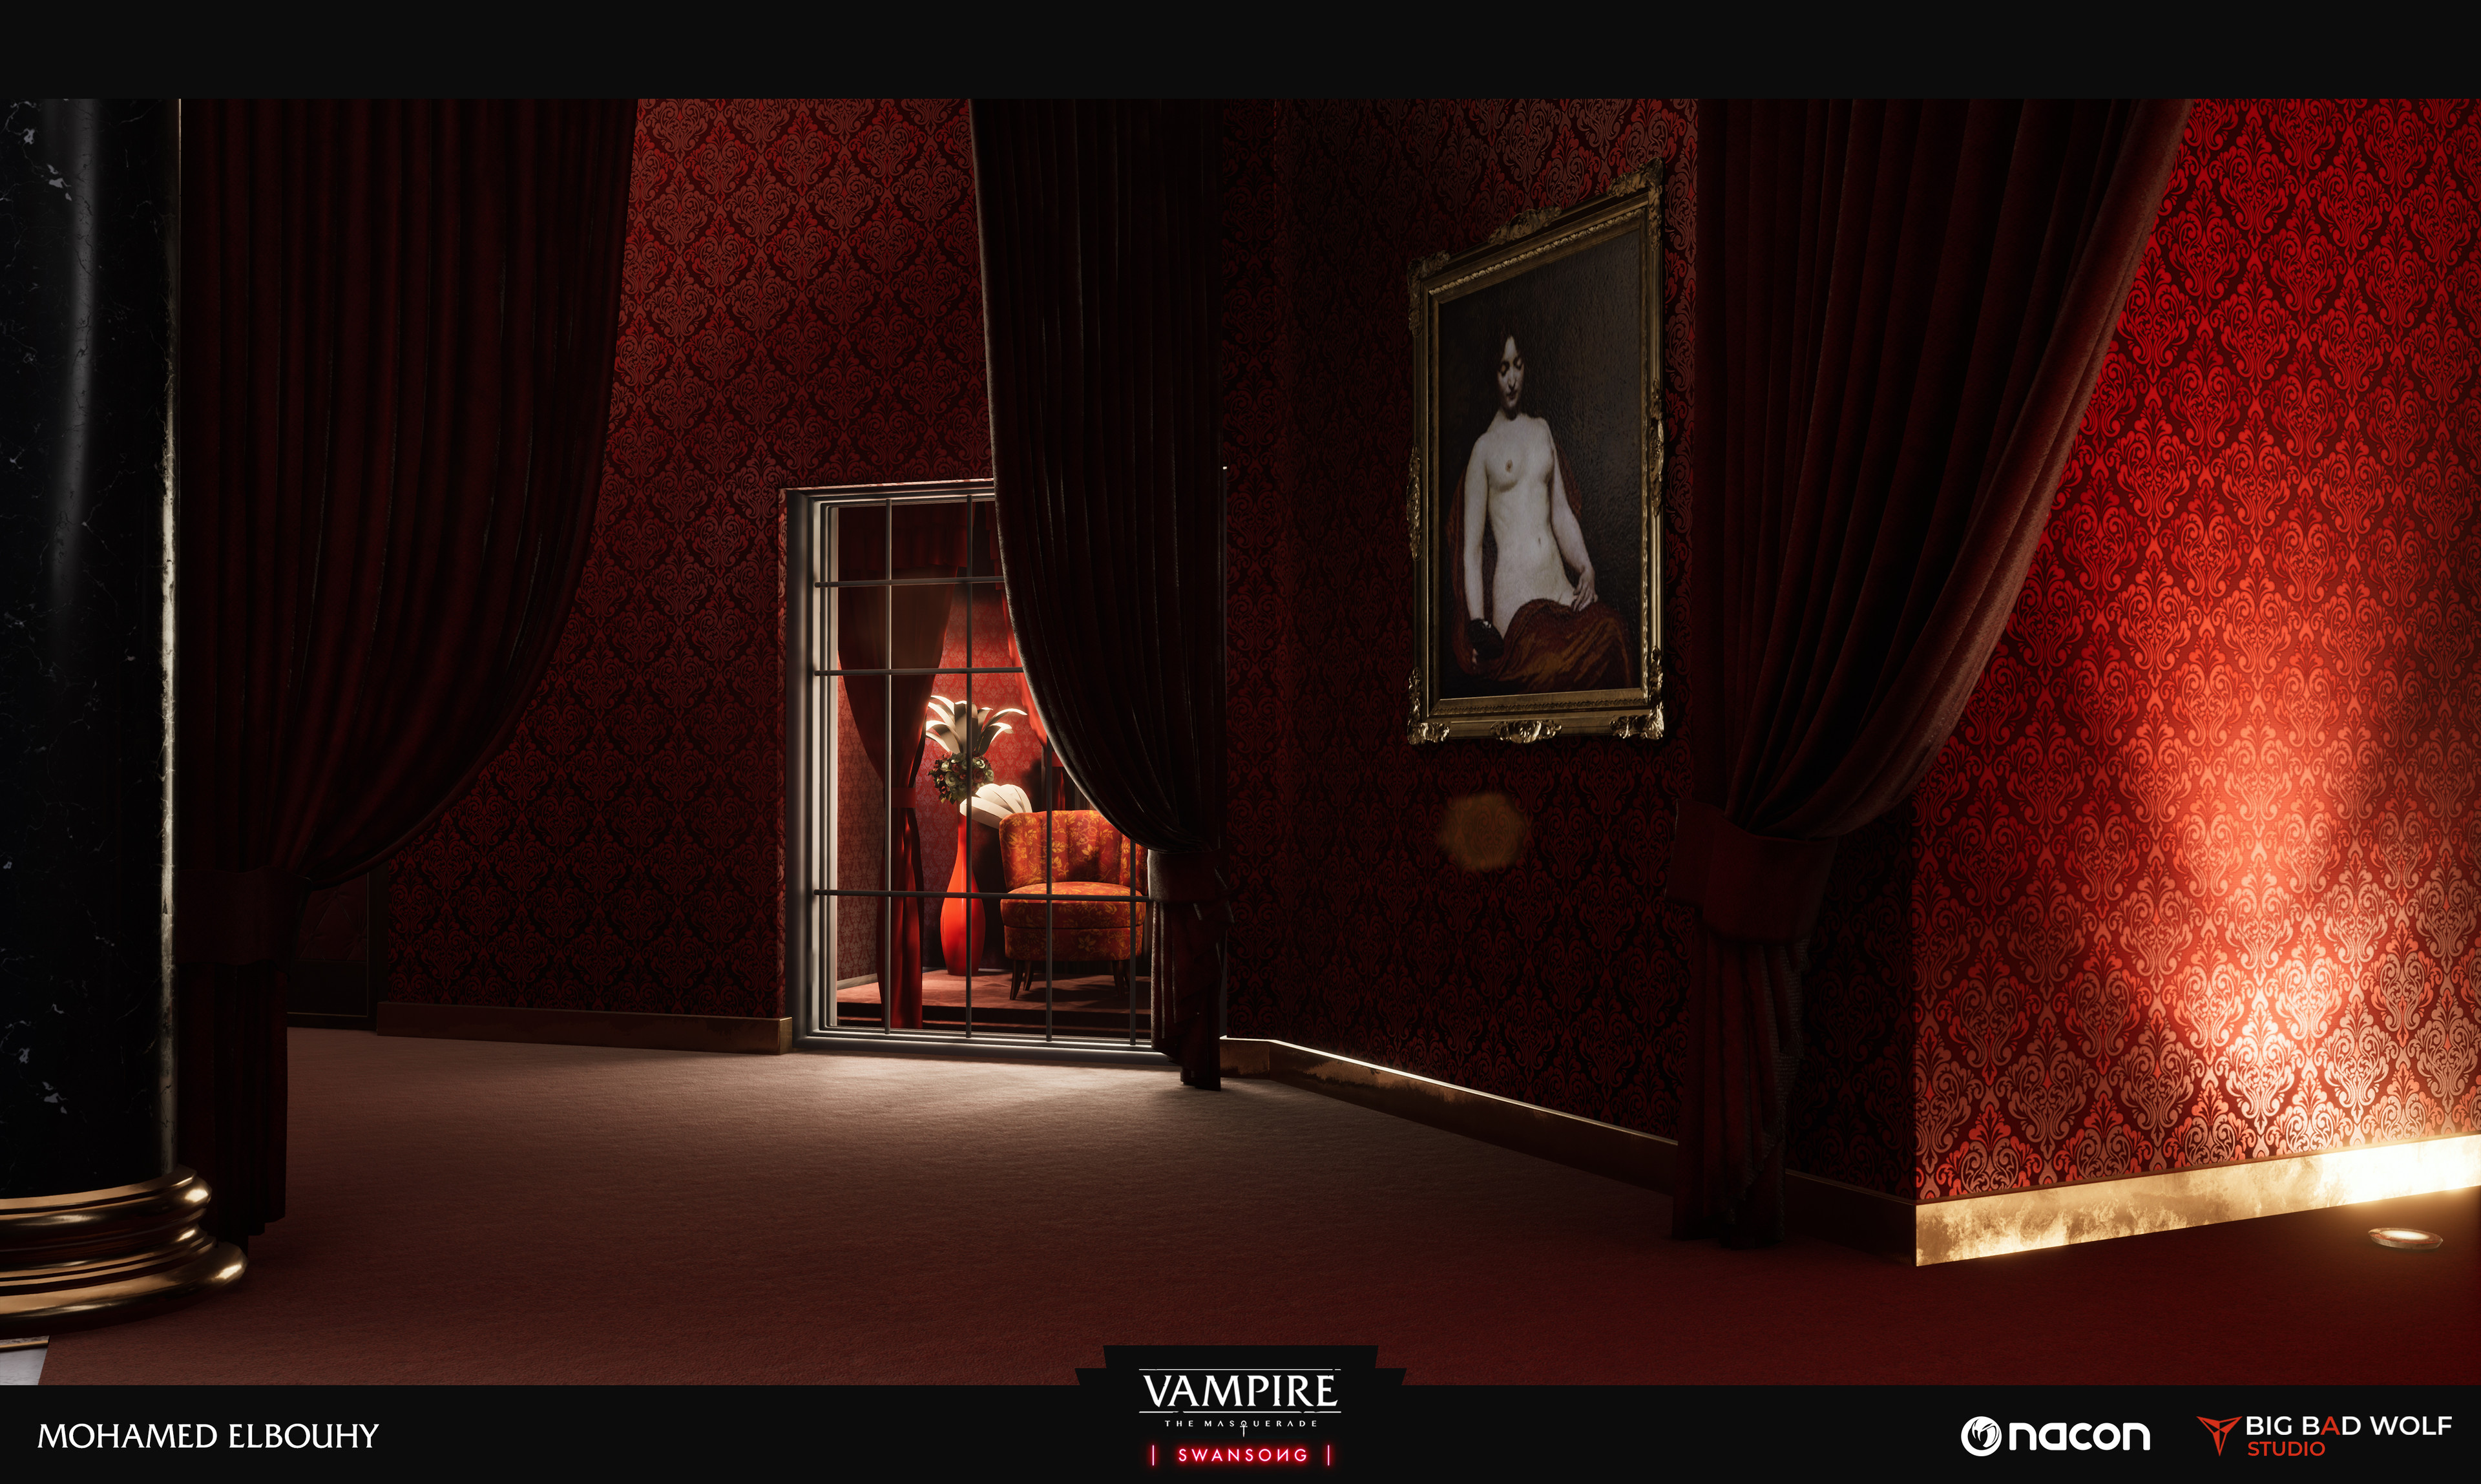 ArtStation - Vampire the Masquerade - Swansong : Atrium VIP Bar